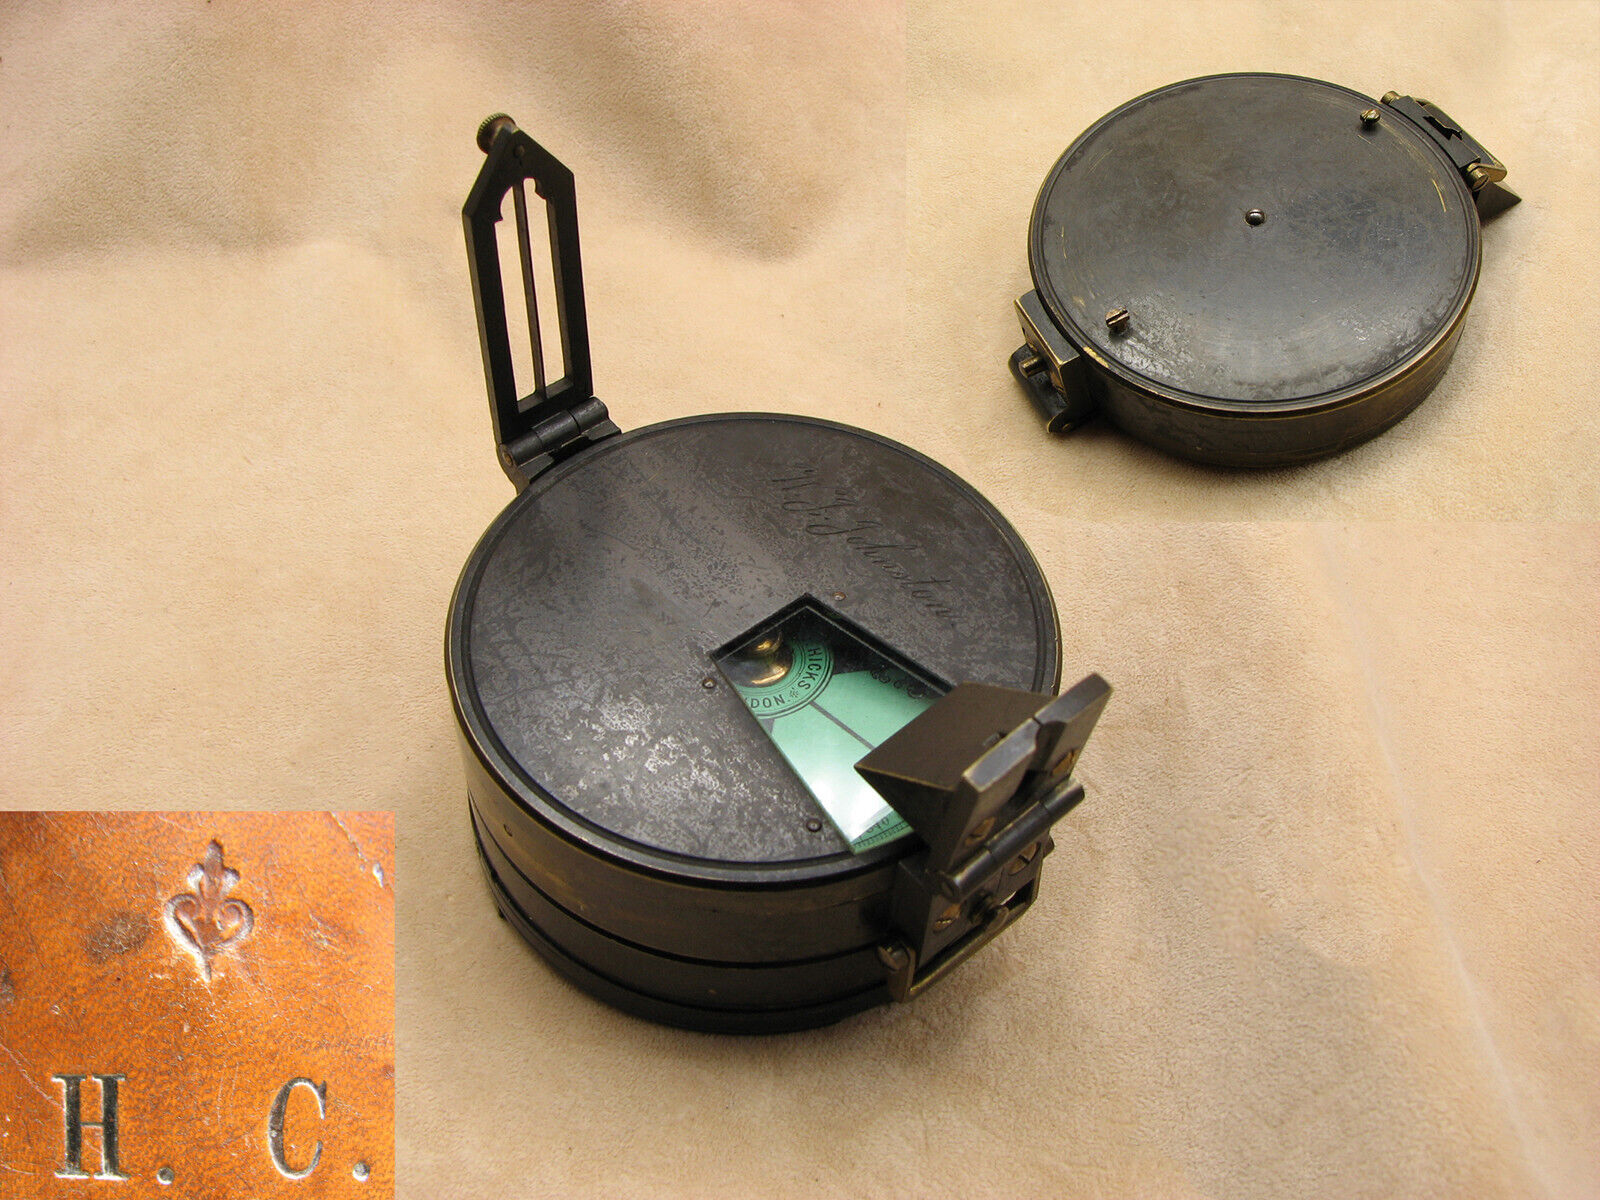 19th Century Hicks compass & Watkins clinometer combination set